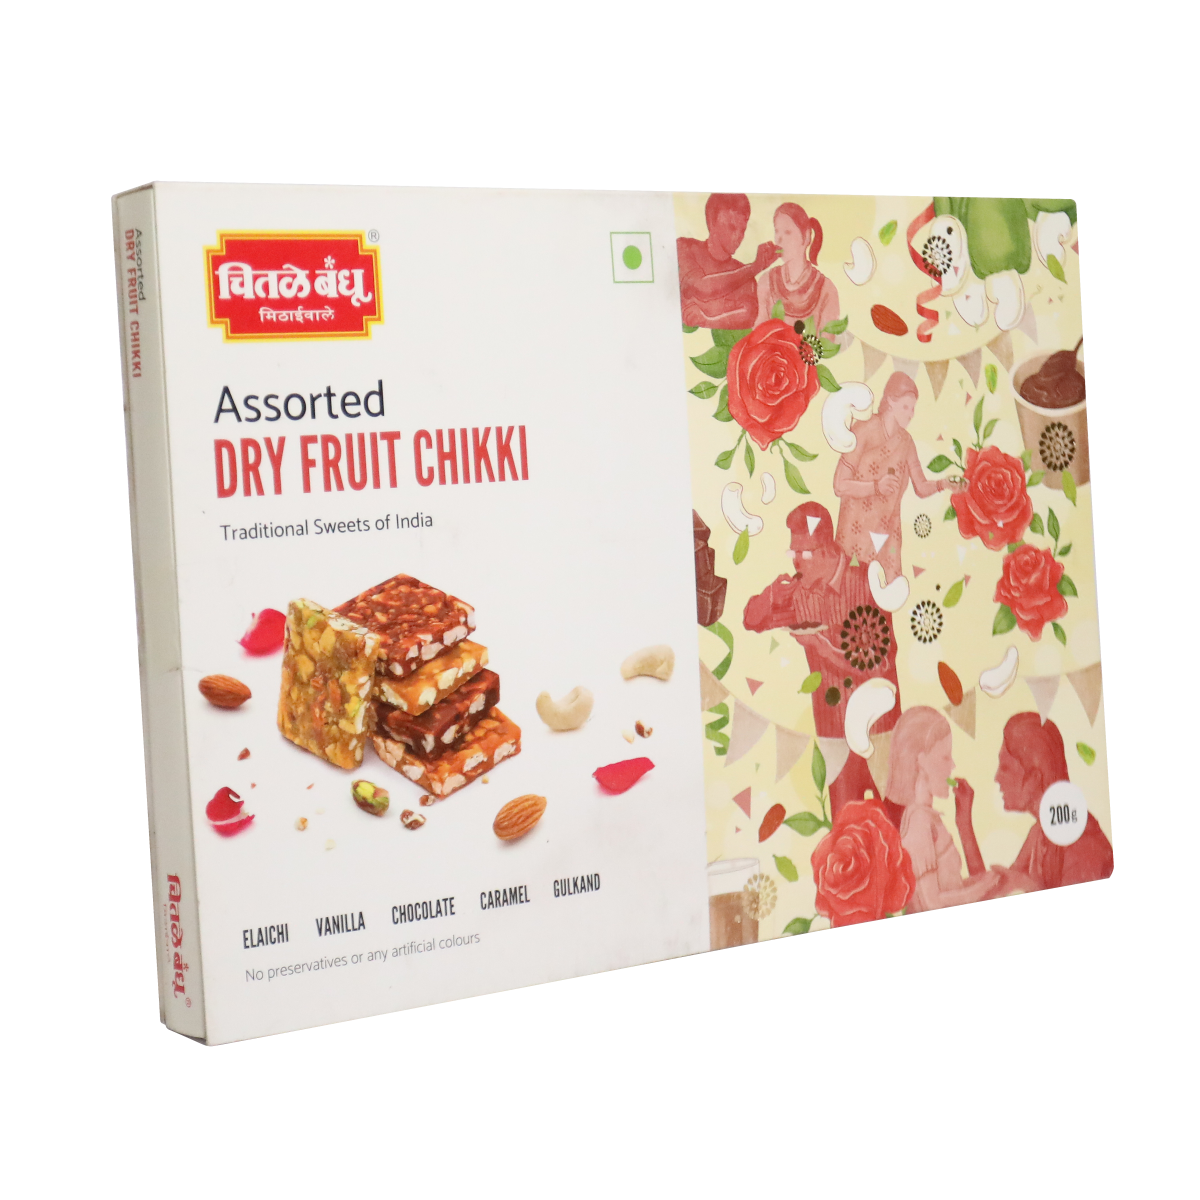 Assorted Dryfruit Chikki Box - Chitale Bandhu Mithaiwale